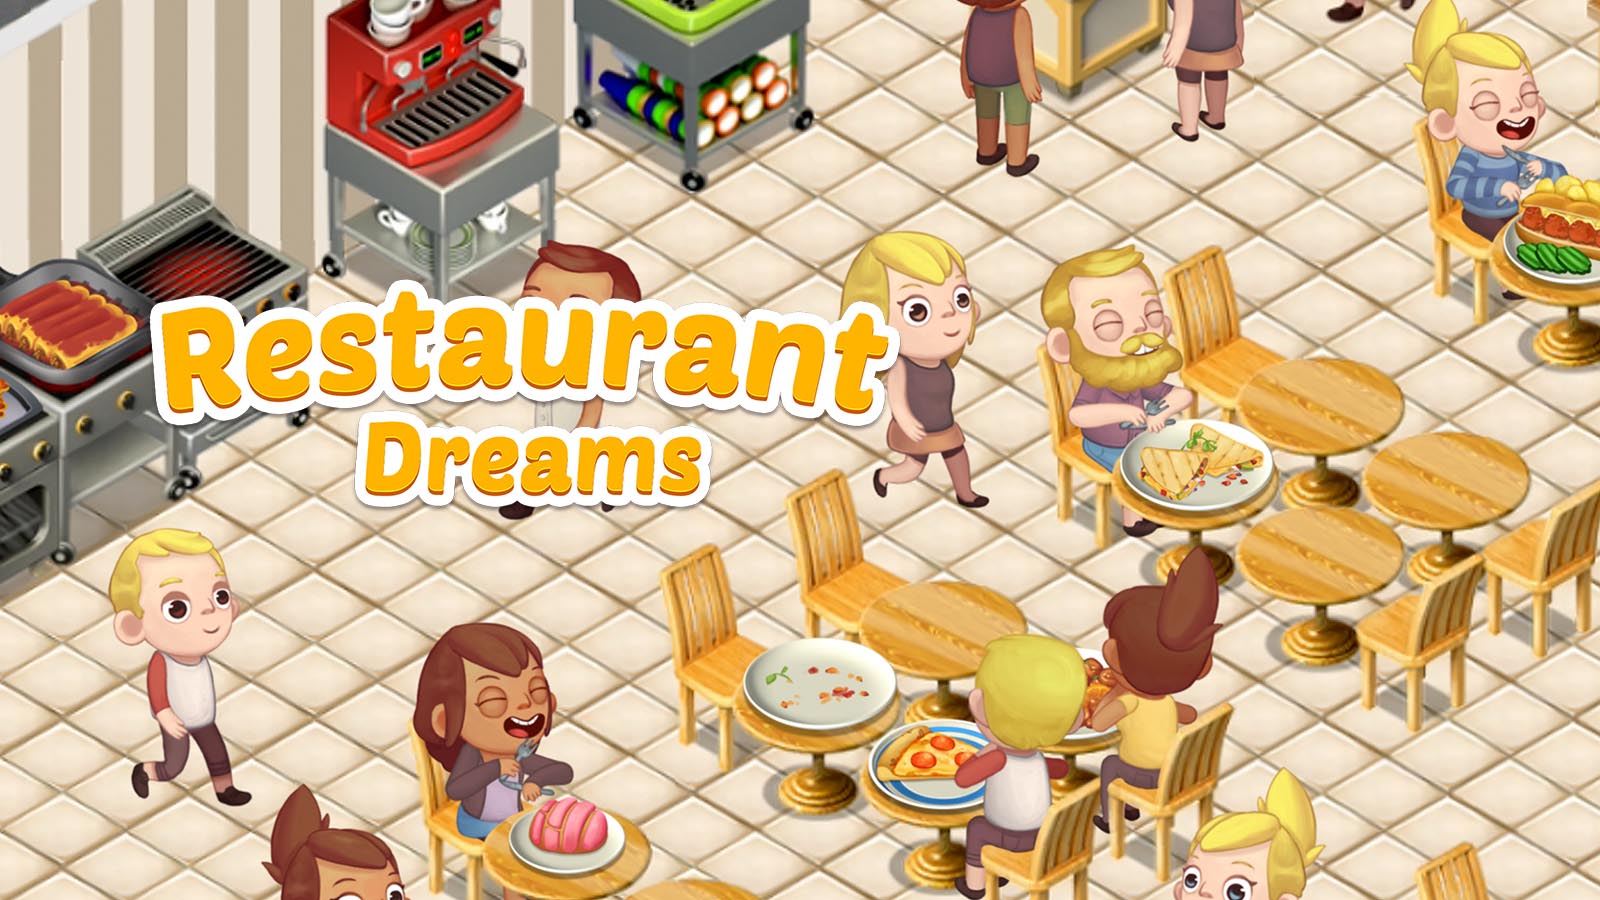 Build your dream restaurant